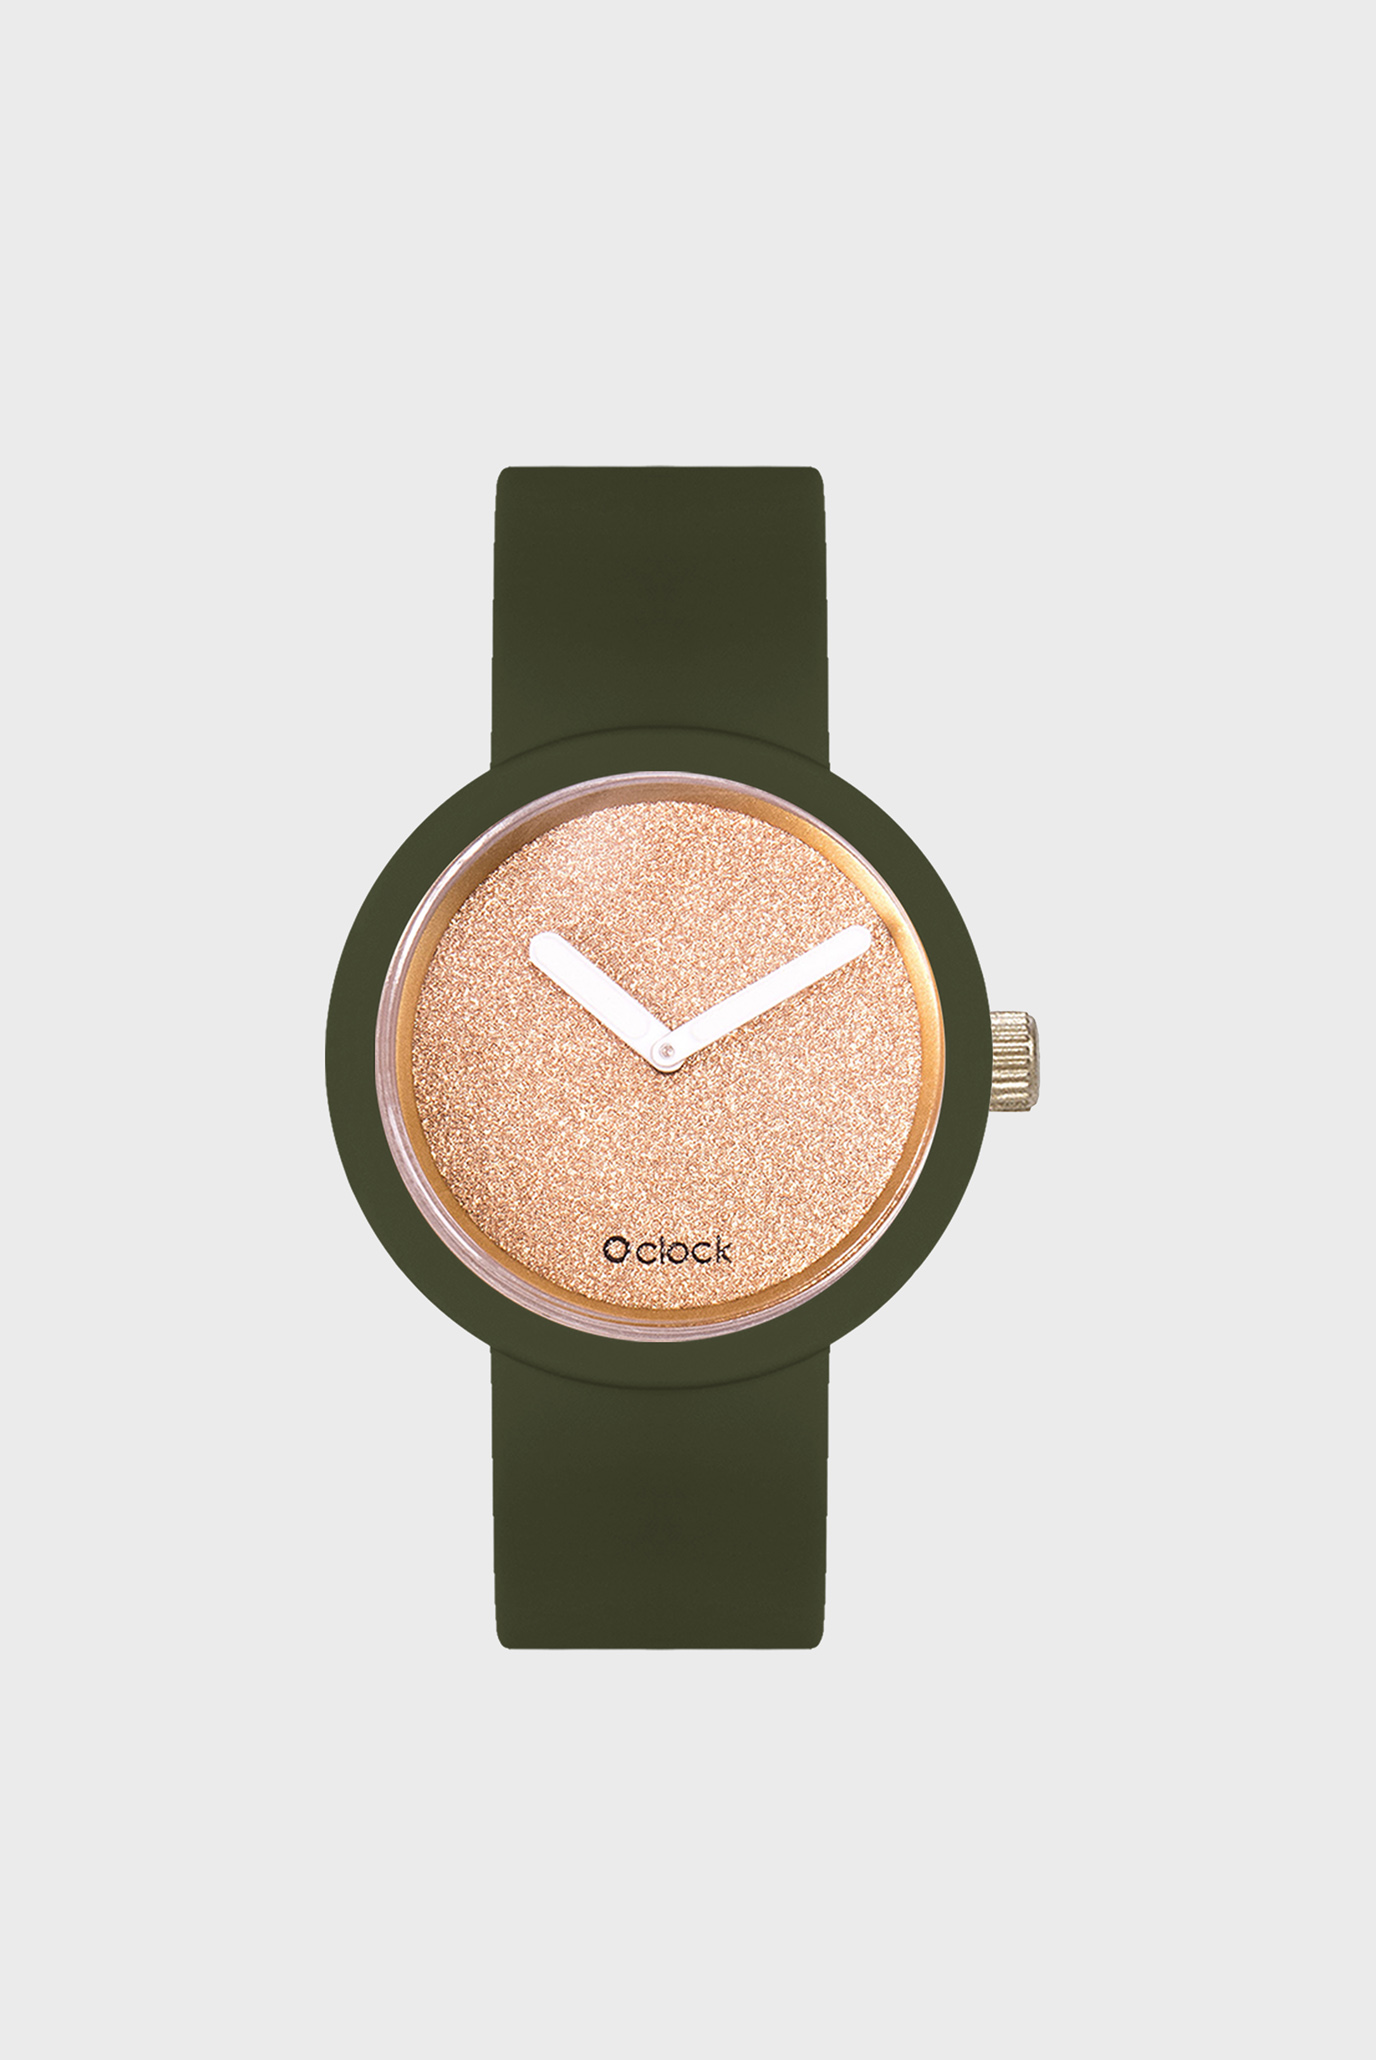 Жіночий зелений годинник O clock 1